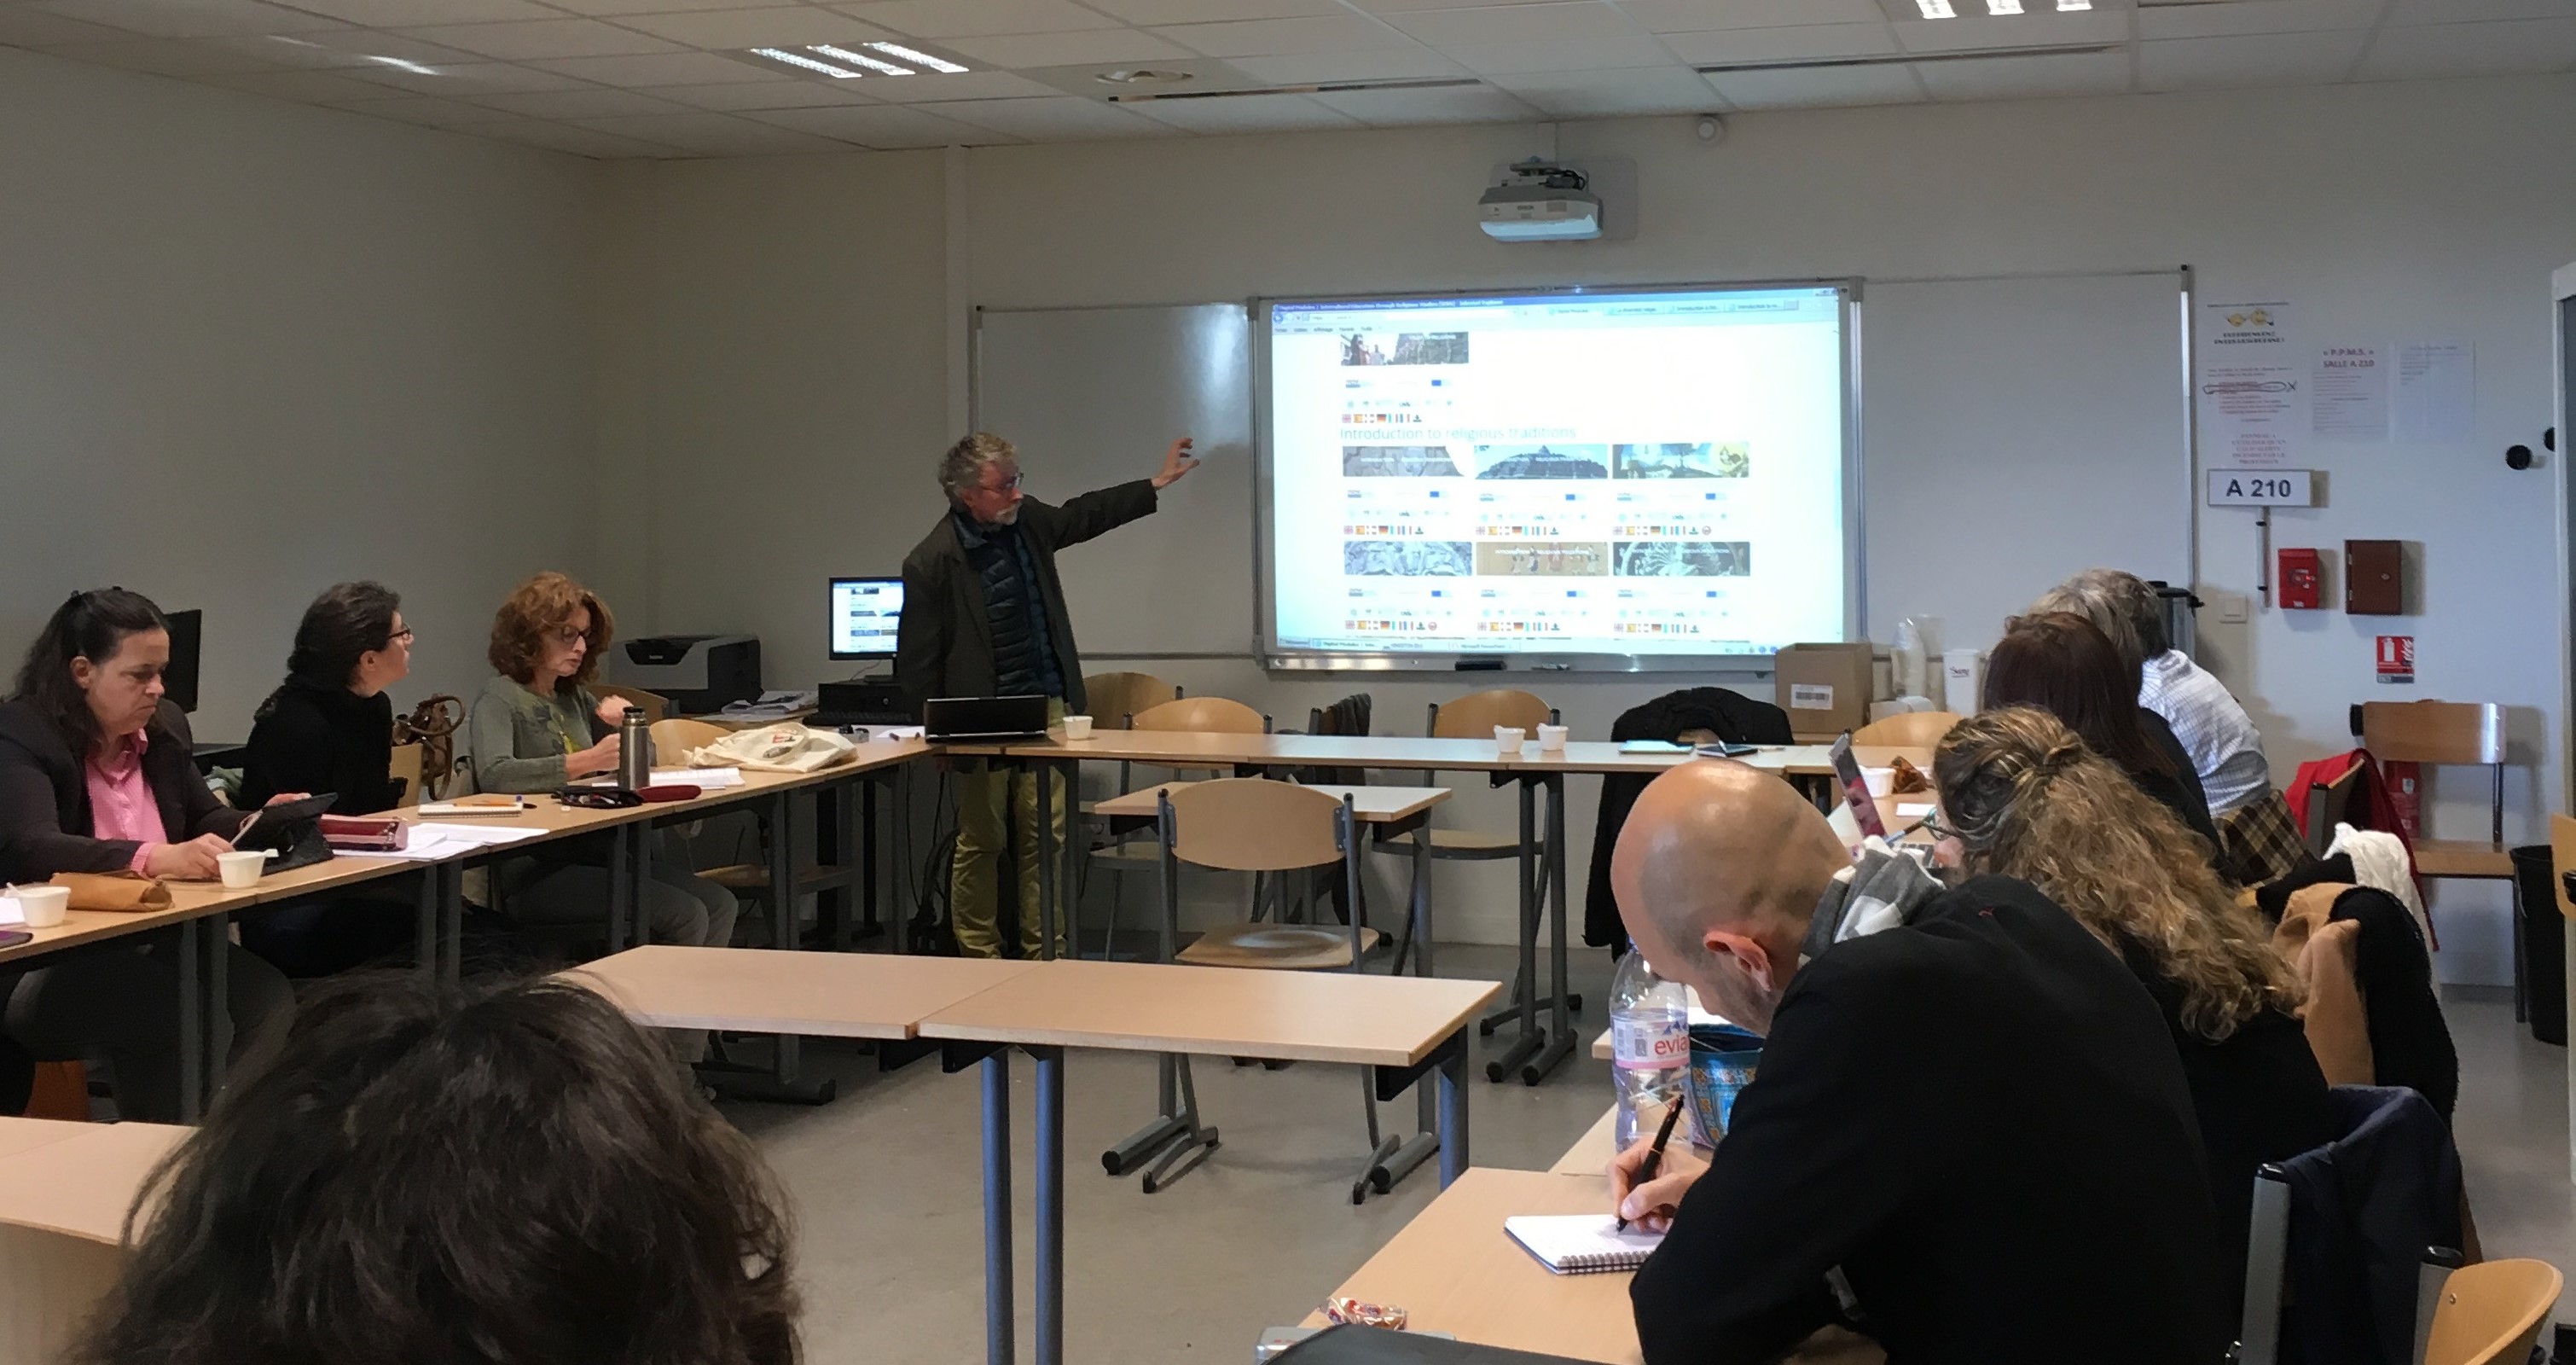 SORAPS Project Presentation at Lycée René Cassin Arpajon (France) in May 2018